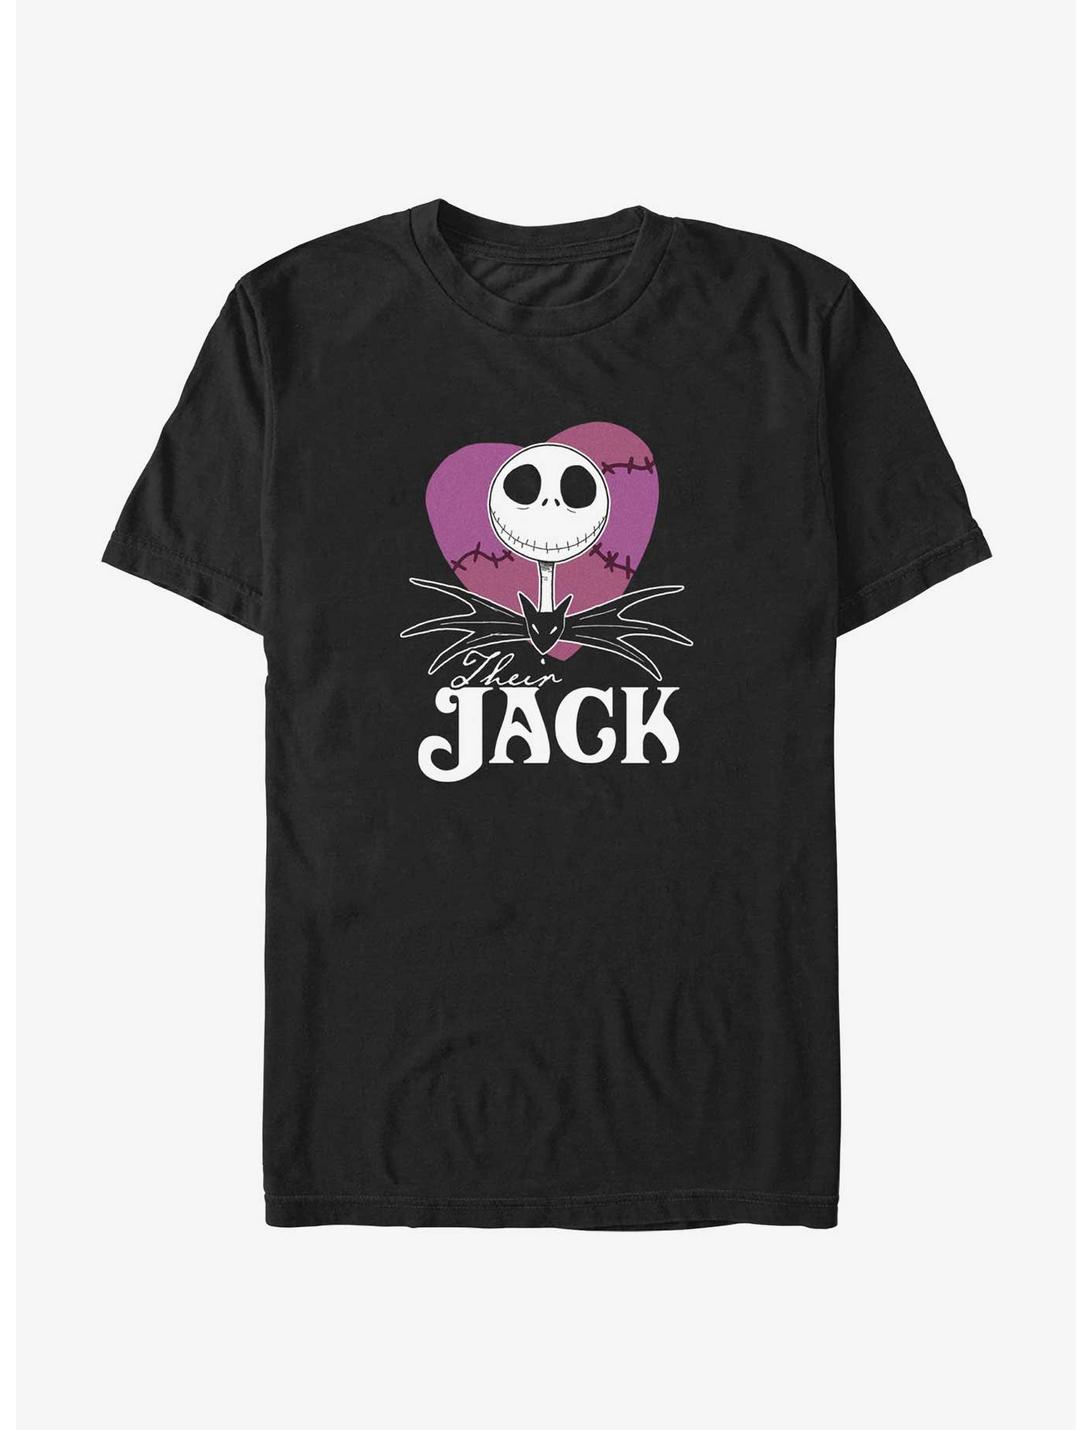 Disney The Nightmare Before Christmas Her Jack T-Shirt, BLACK, hi-res